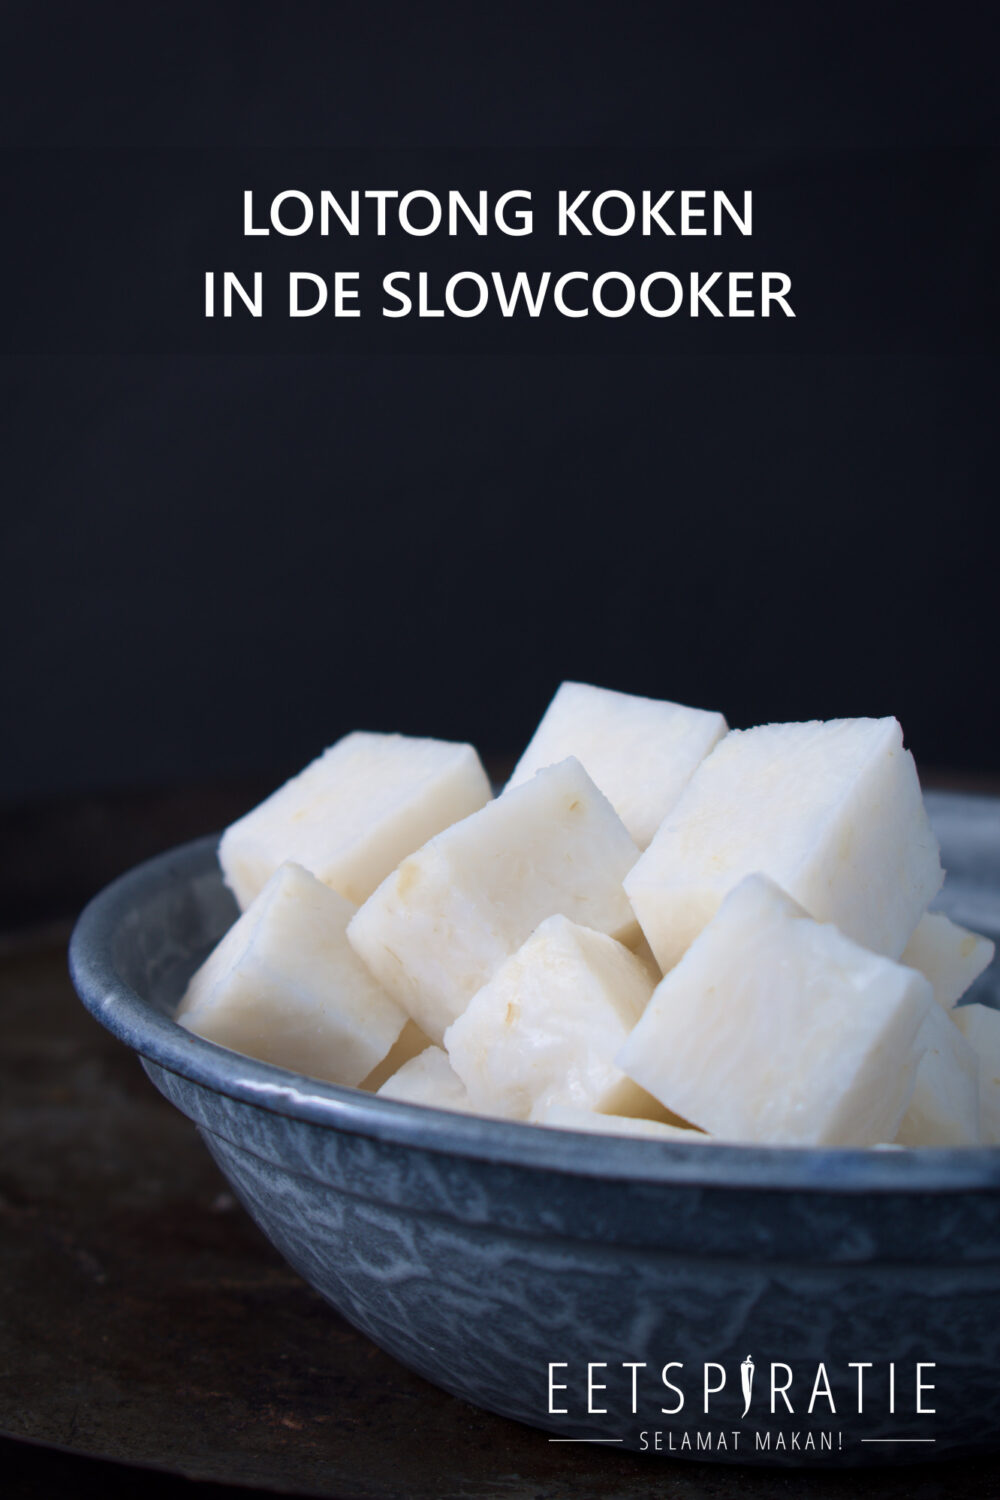 Lontong koken in de slowcooker